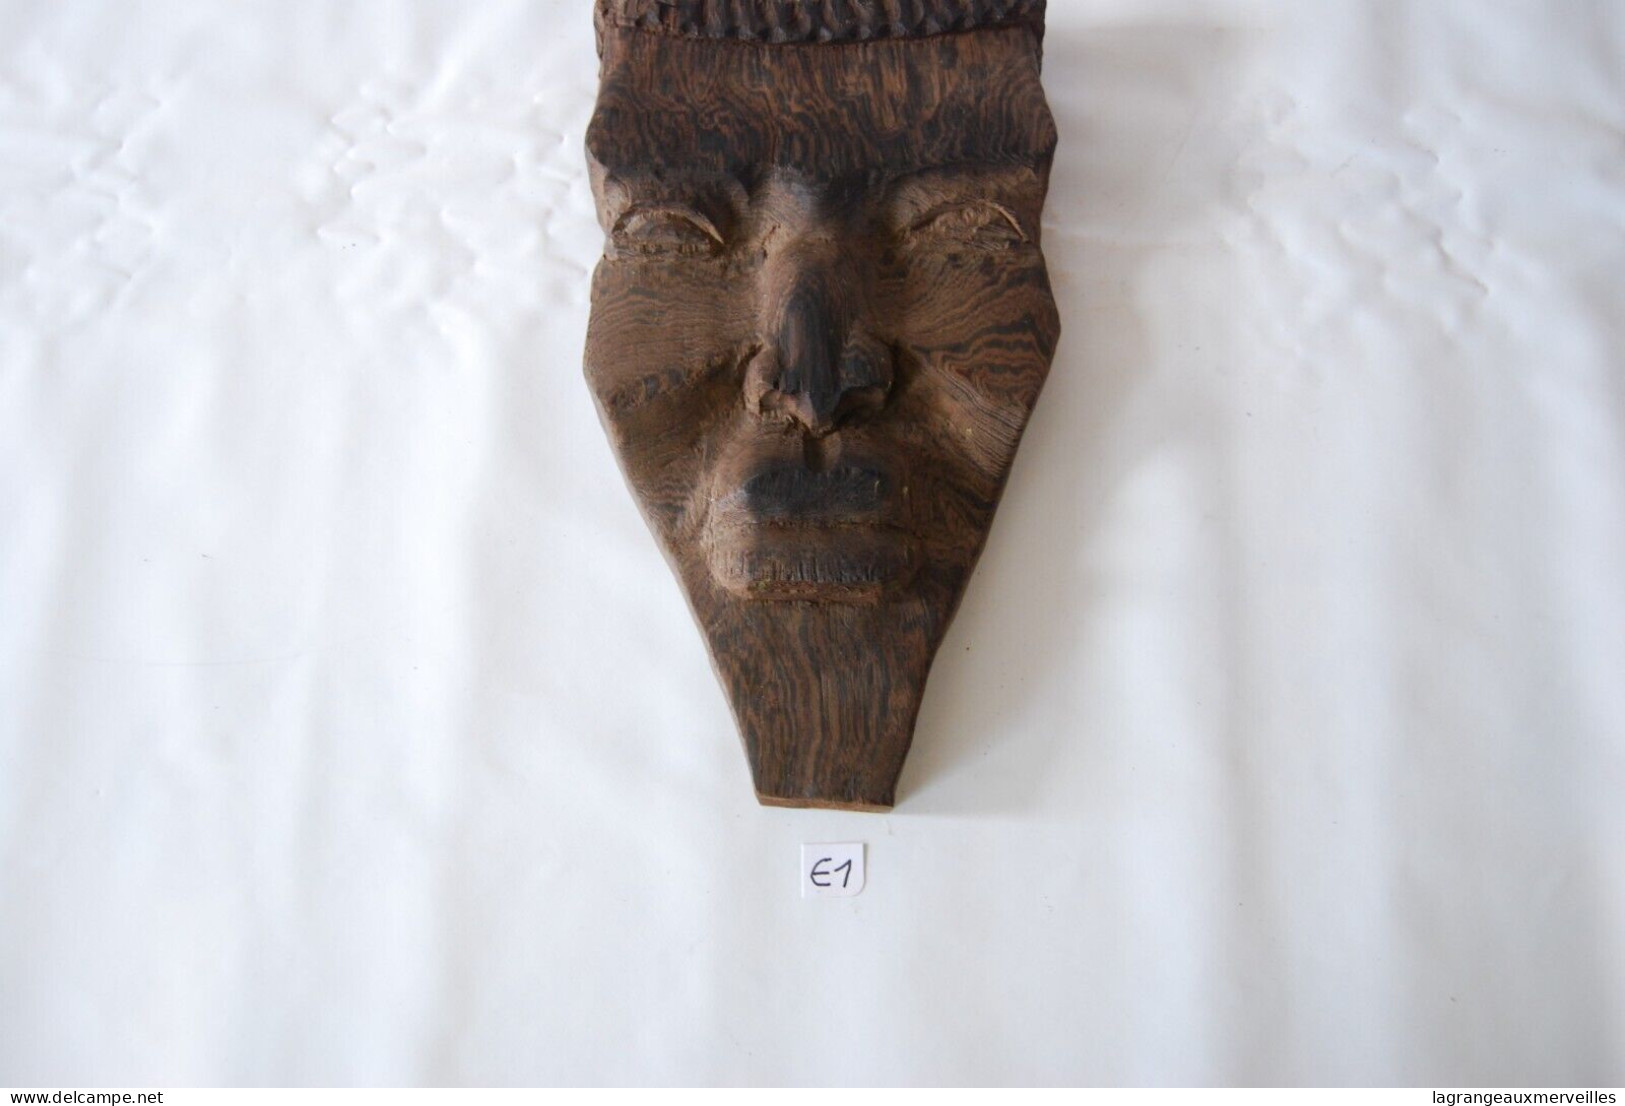 E1 Ancienne masque buste africain - outil ancien - ethnique - tribal H30